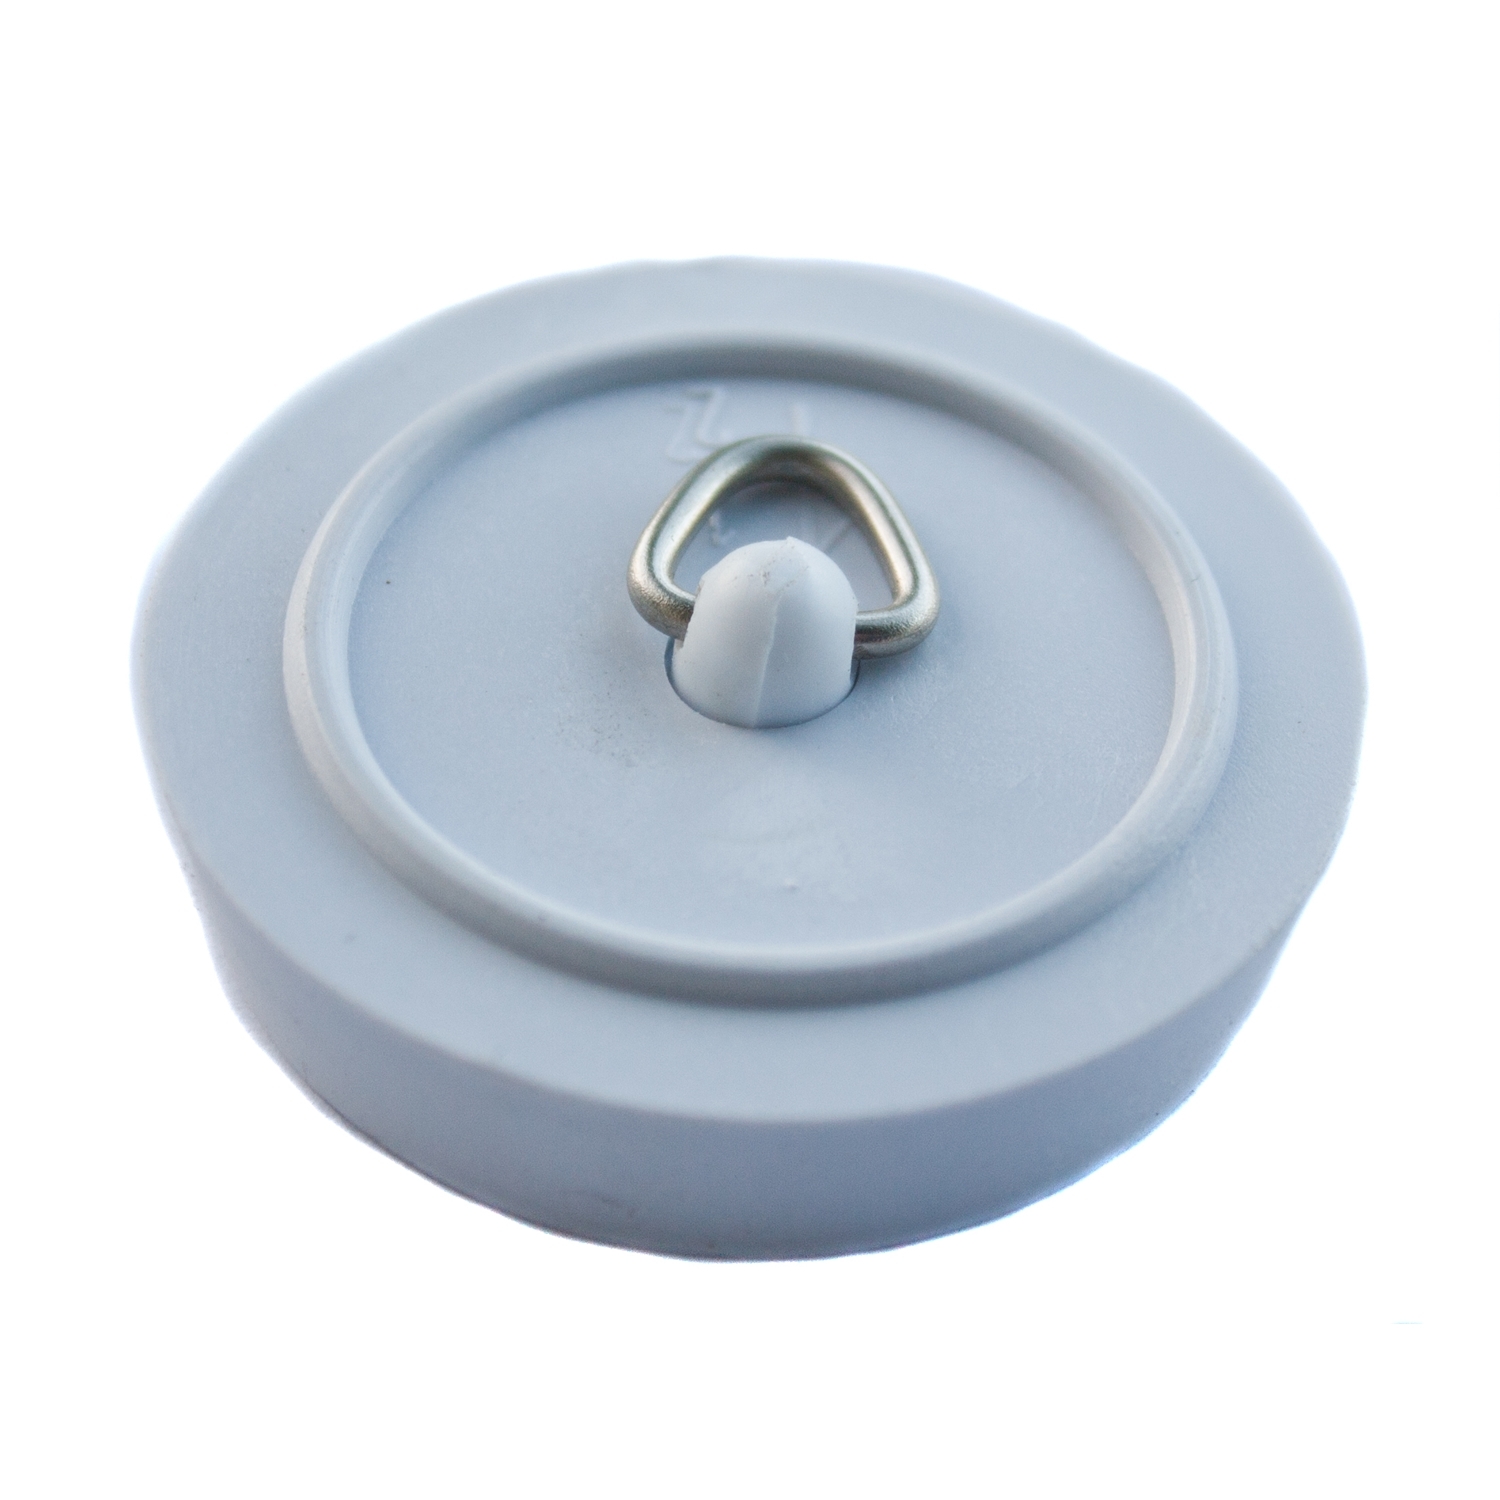 Oracstar Polythene Sink Plug - White / 44.5mm Image